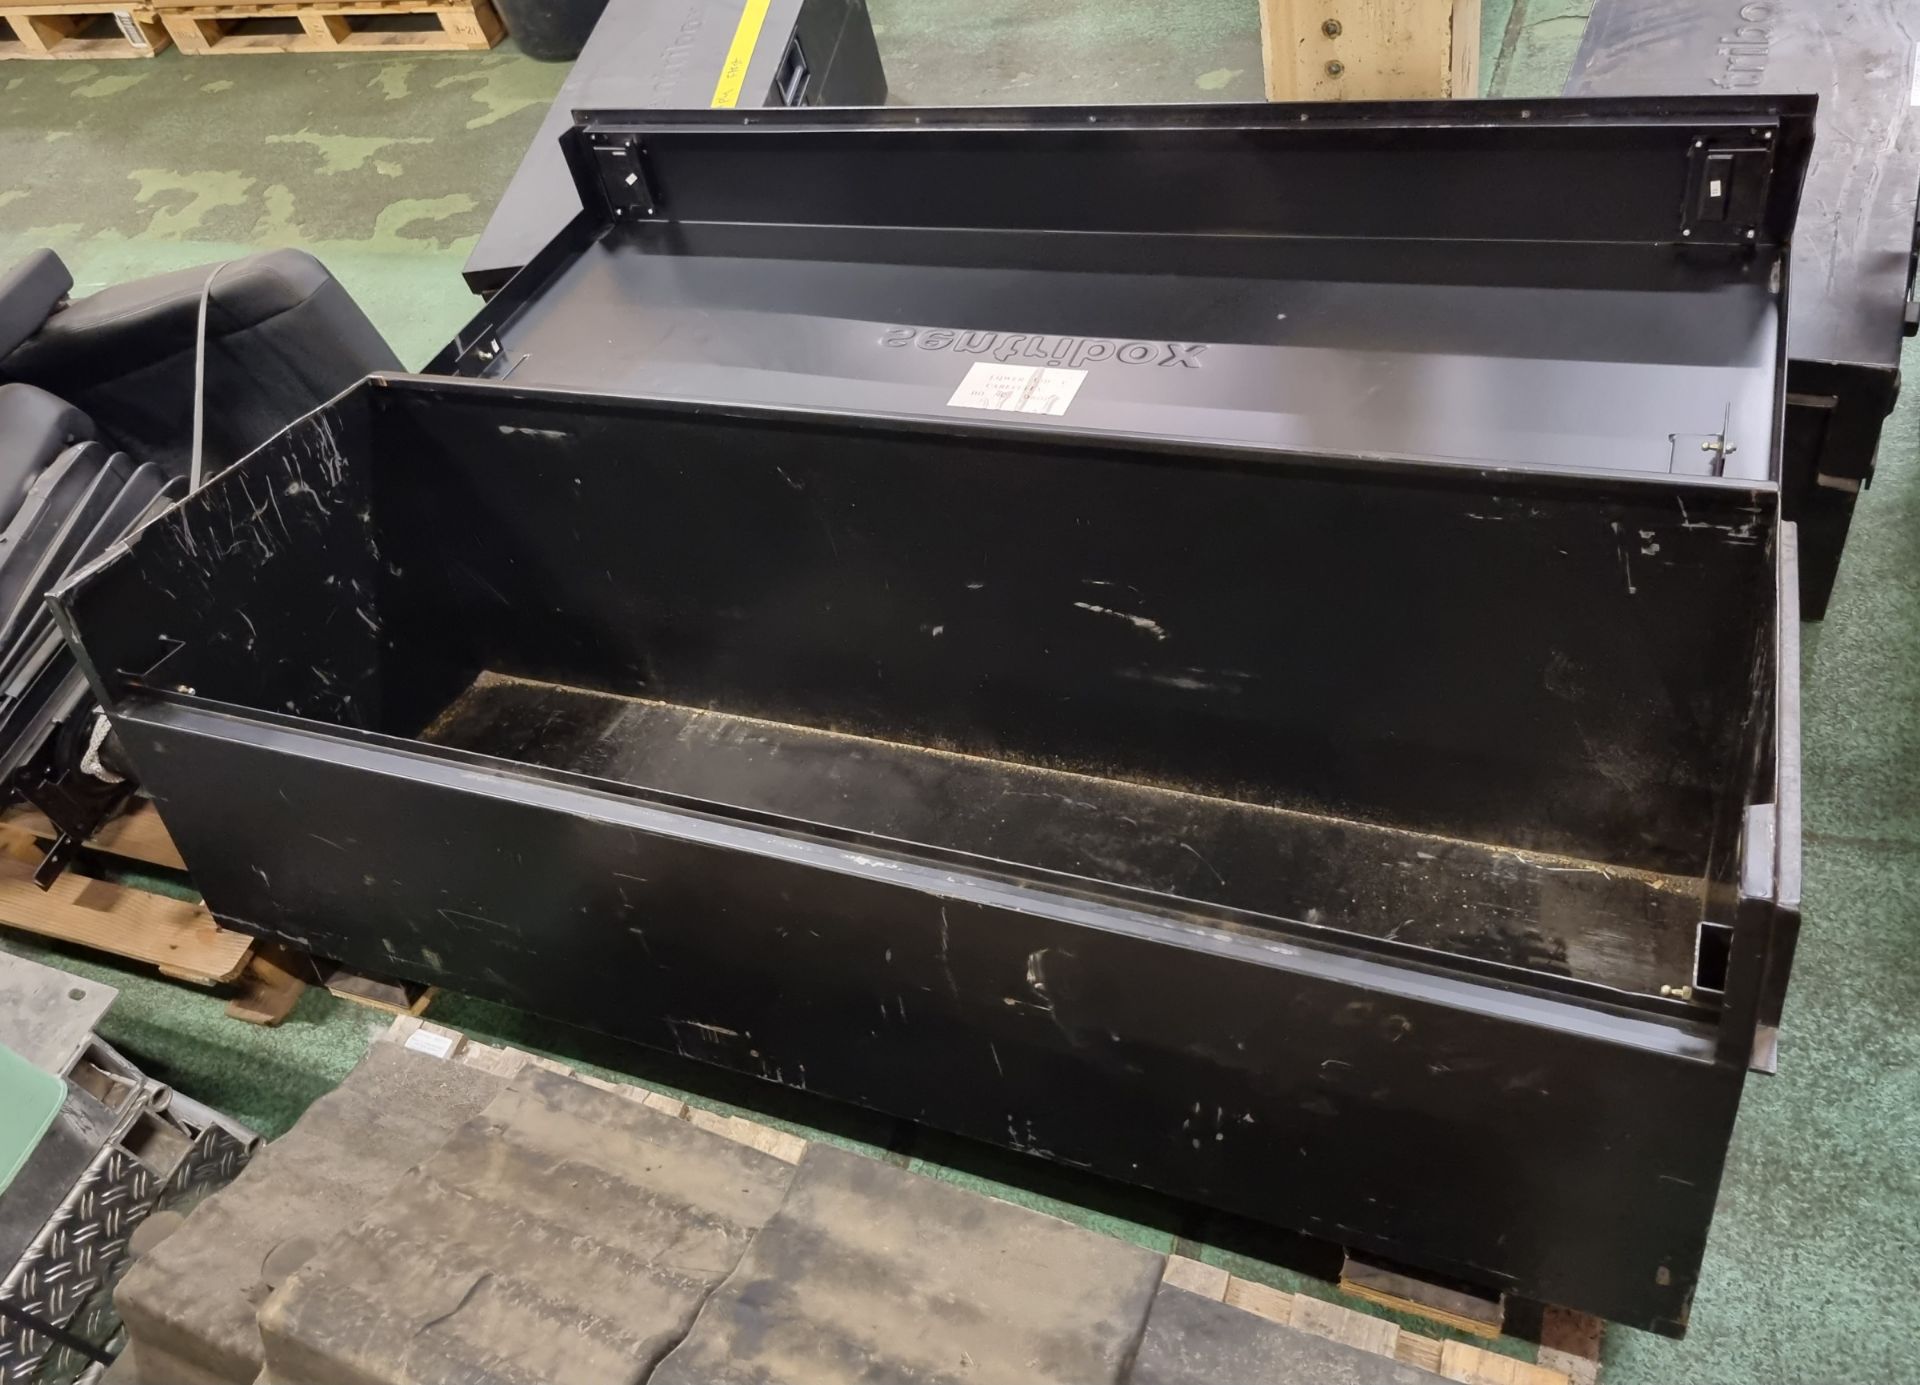 Sentribox steel storage container (no gas struts) - dimensions: 185x63x65cm - Image 2 of 5